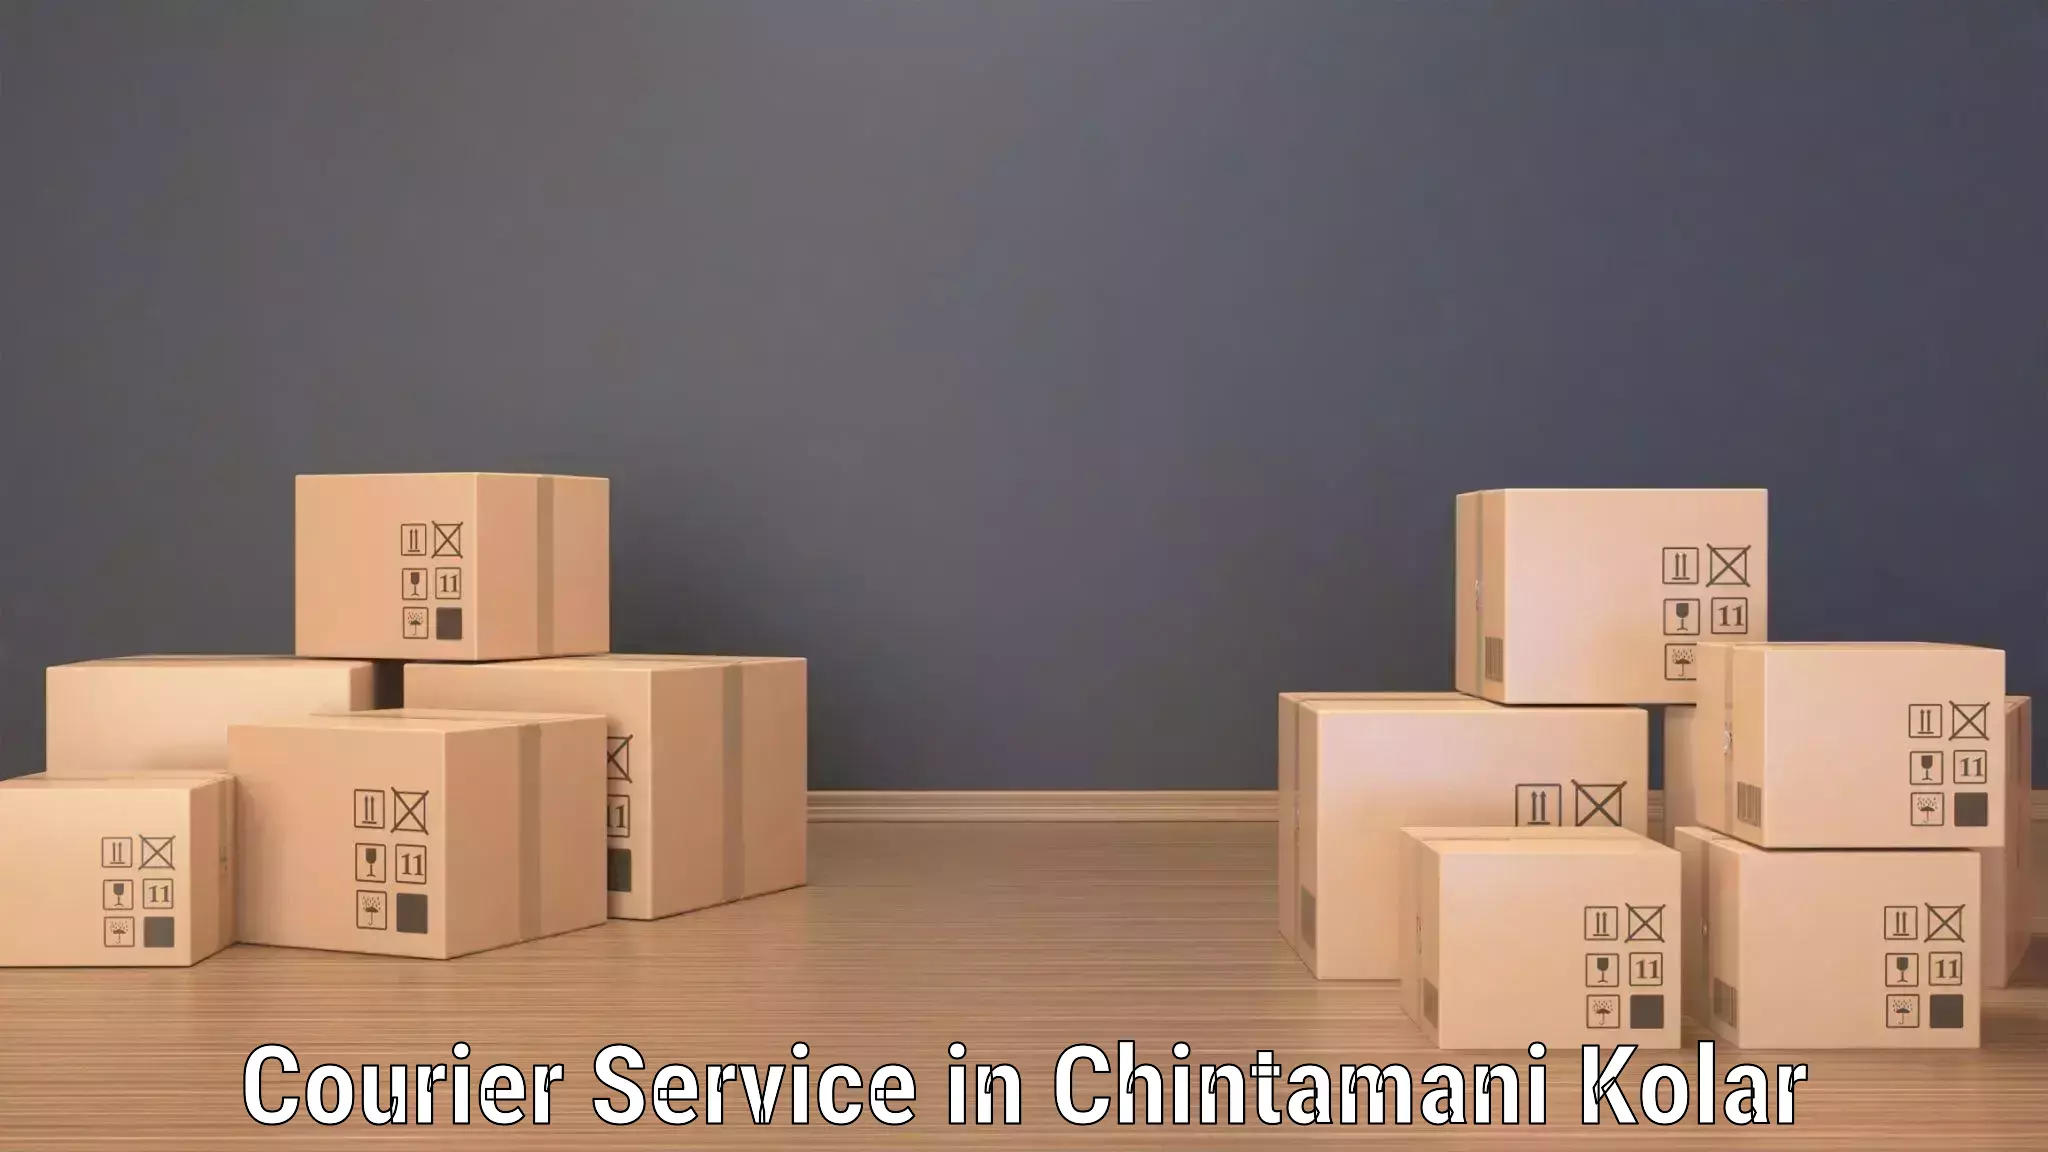 Affordable parcel rates in Chintamani Kolar